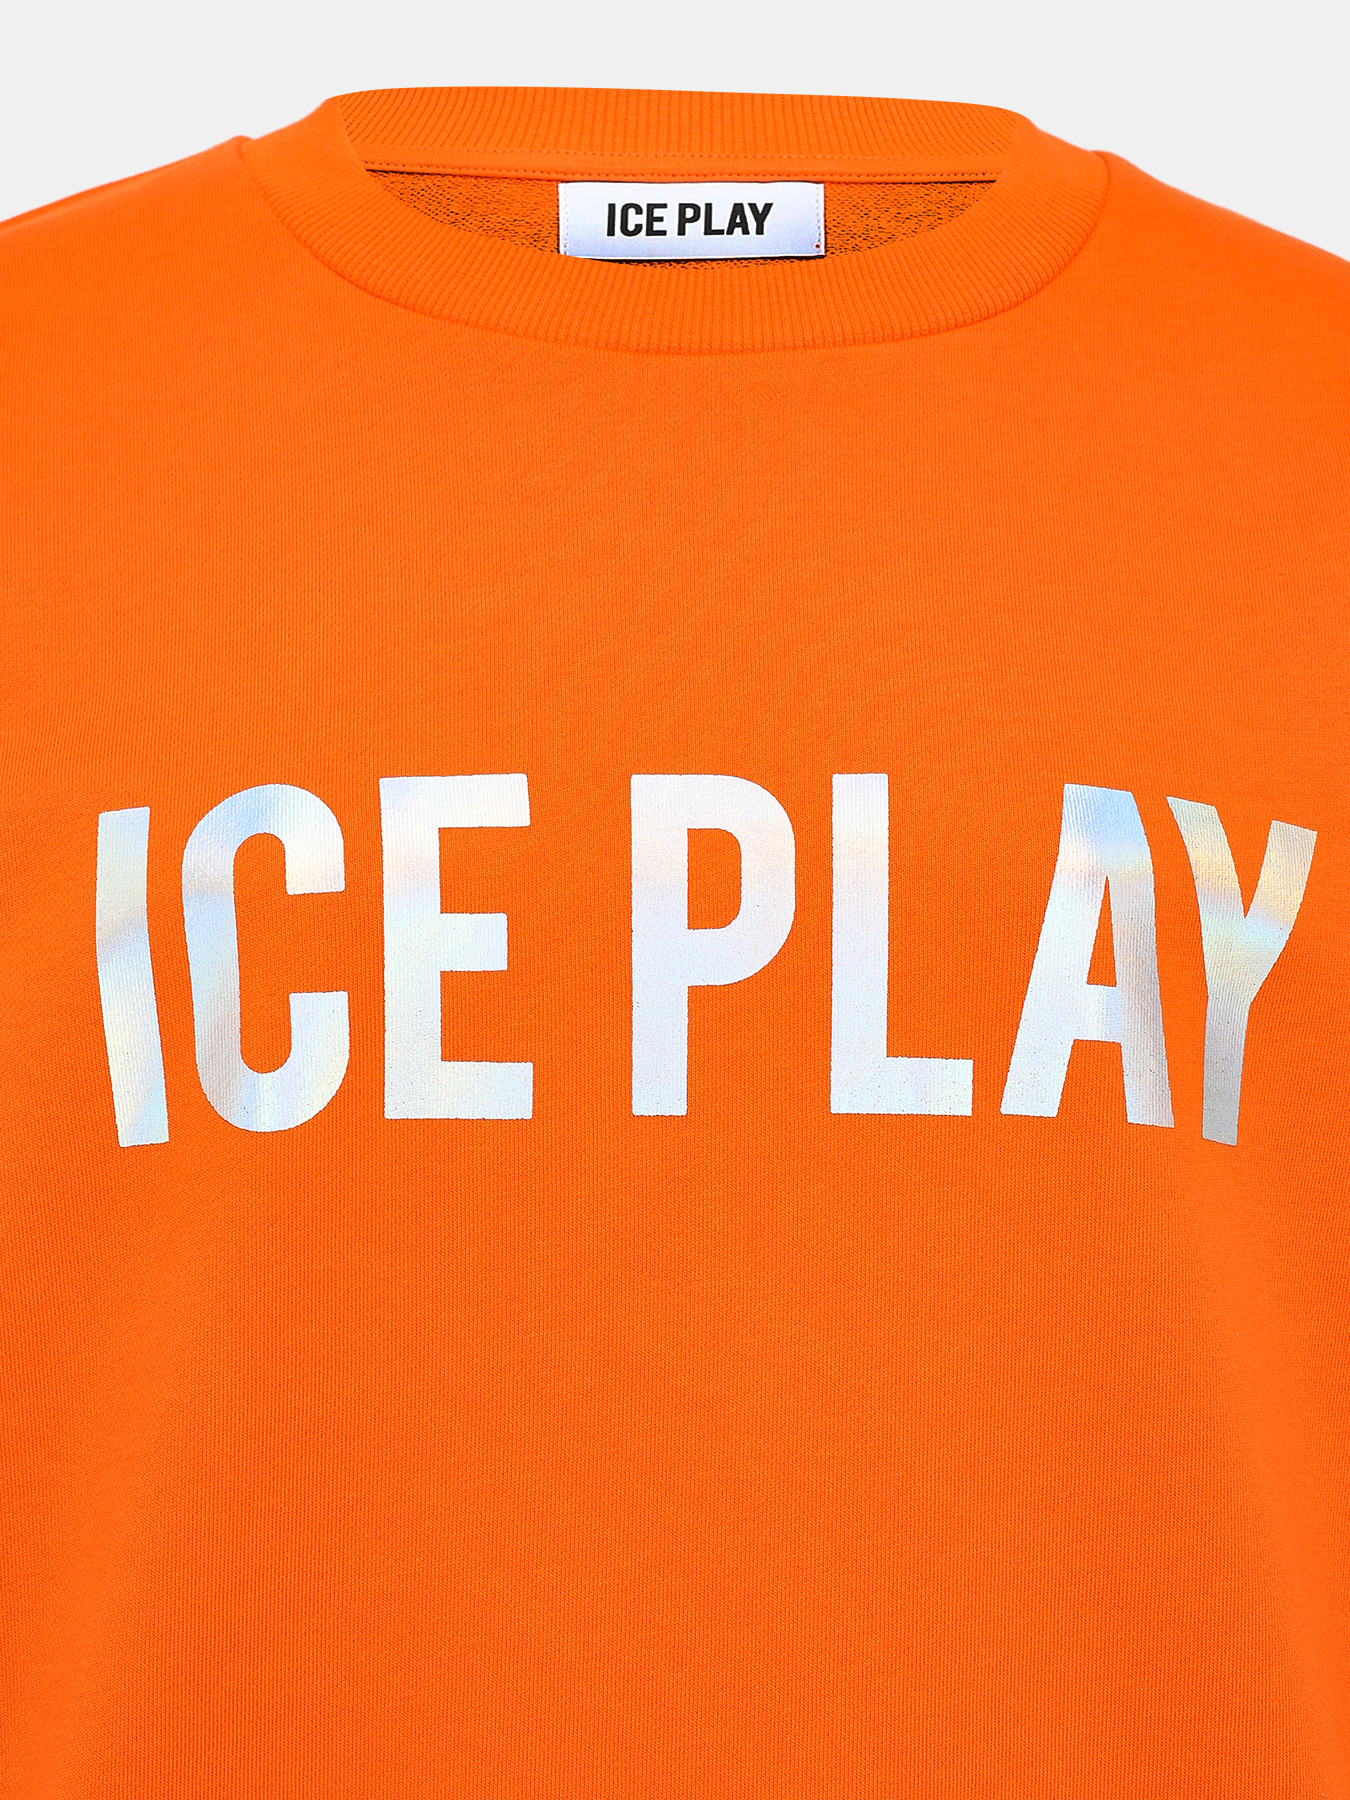 Одежда айс. Ice Play одежда. Ice Play магазины. Платье айс плей. Ice Play одежда купить.